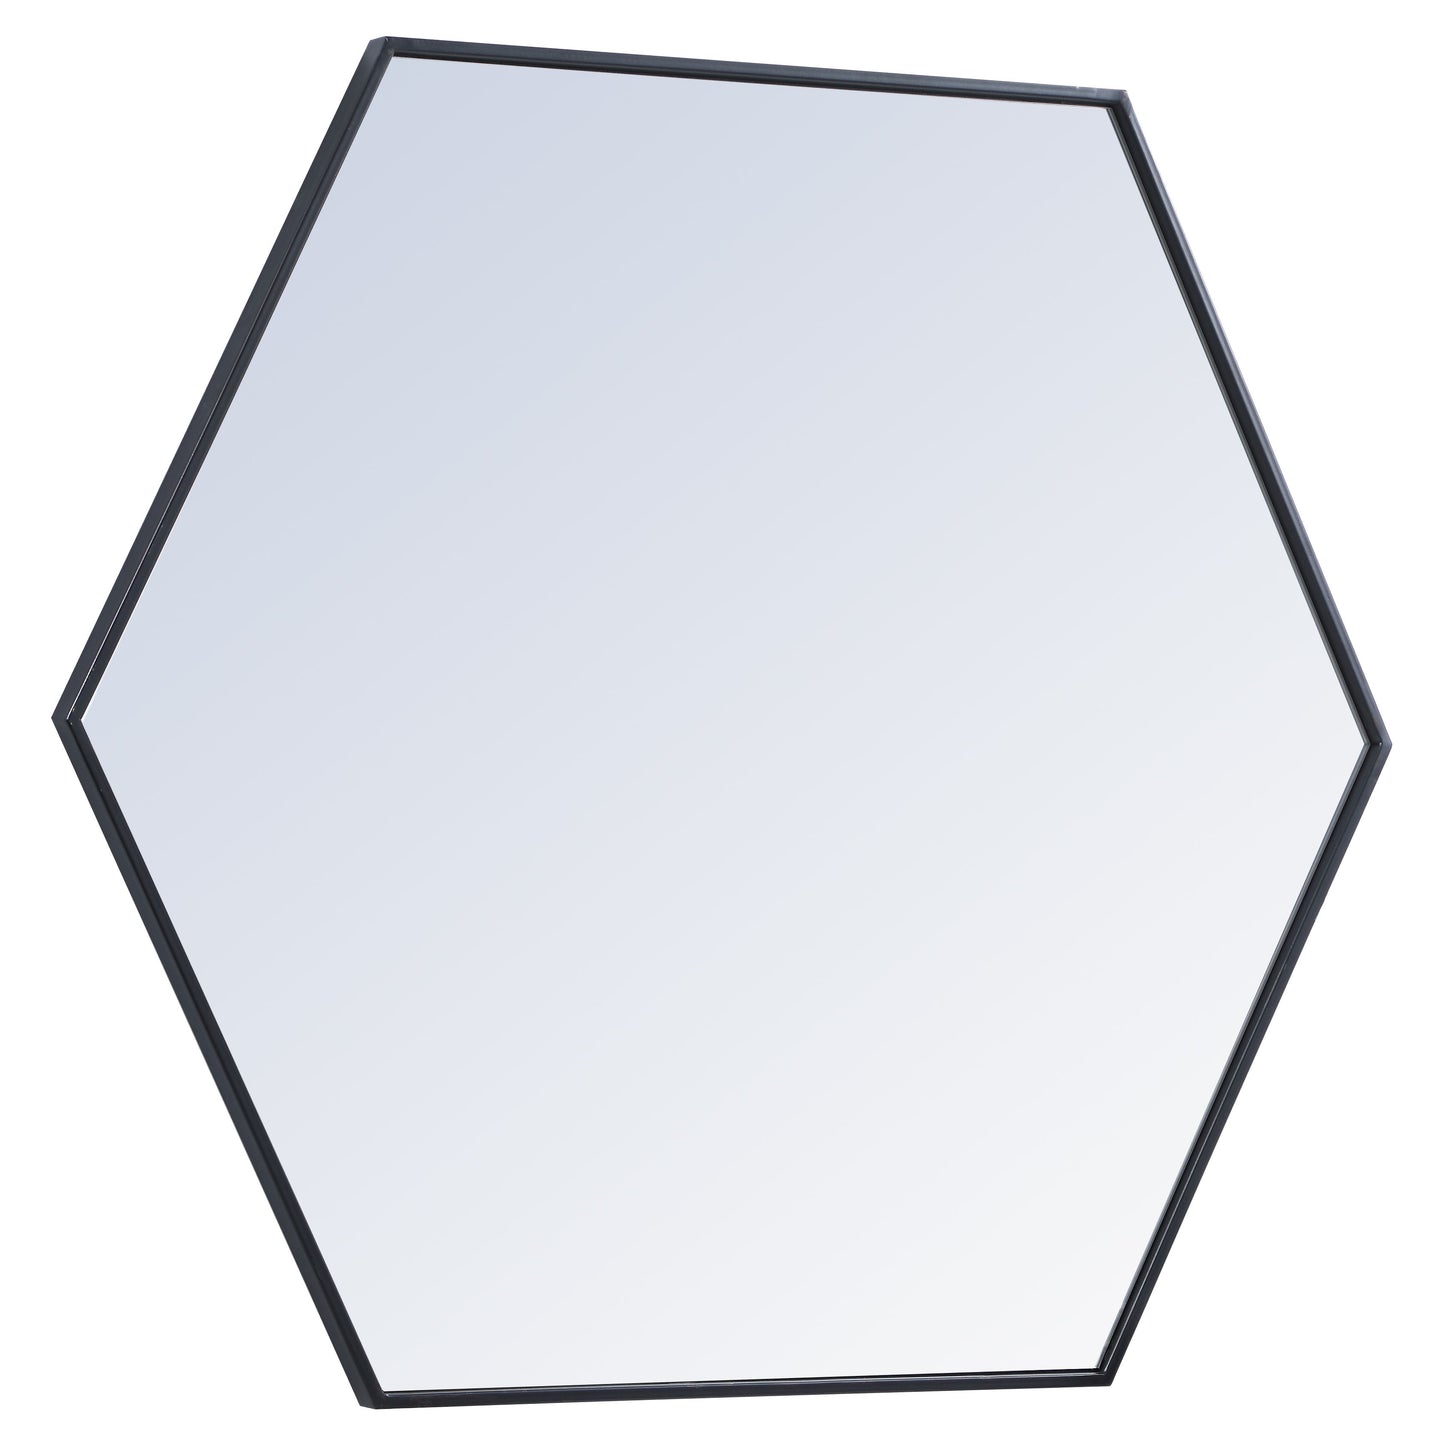 MR4541BK Decker 41" x 35" Metal Framed Hexagon Mirror in Black